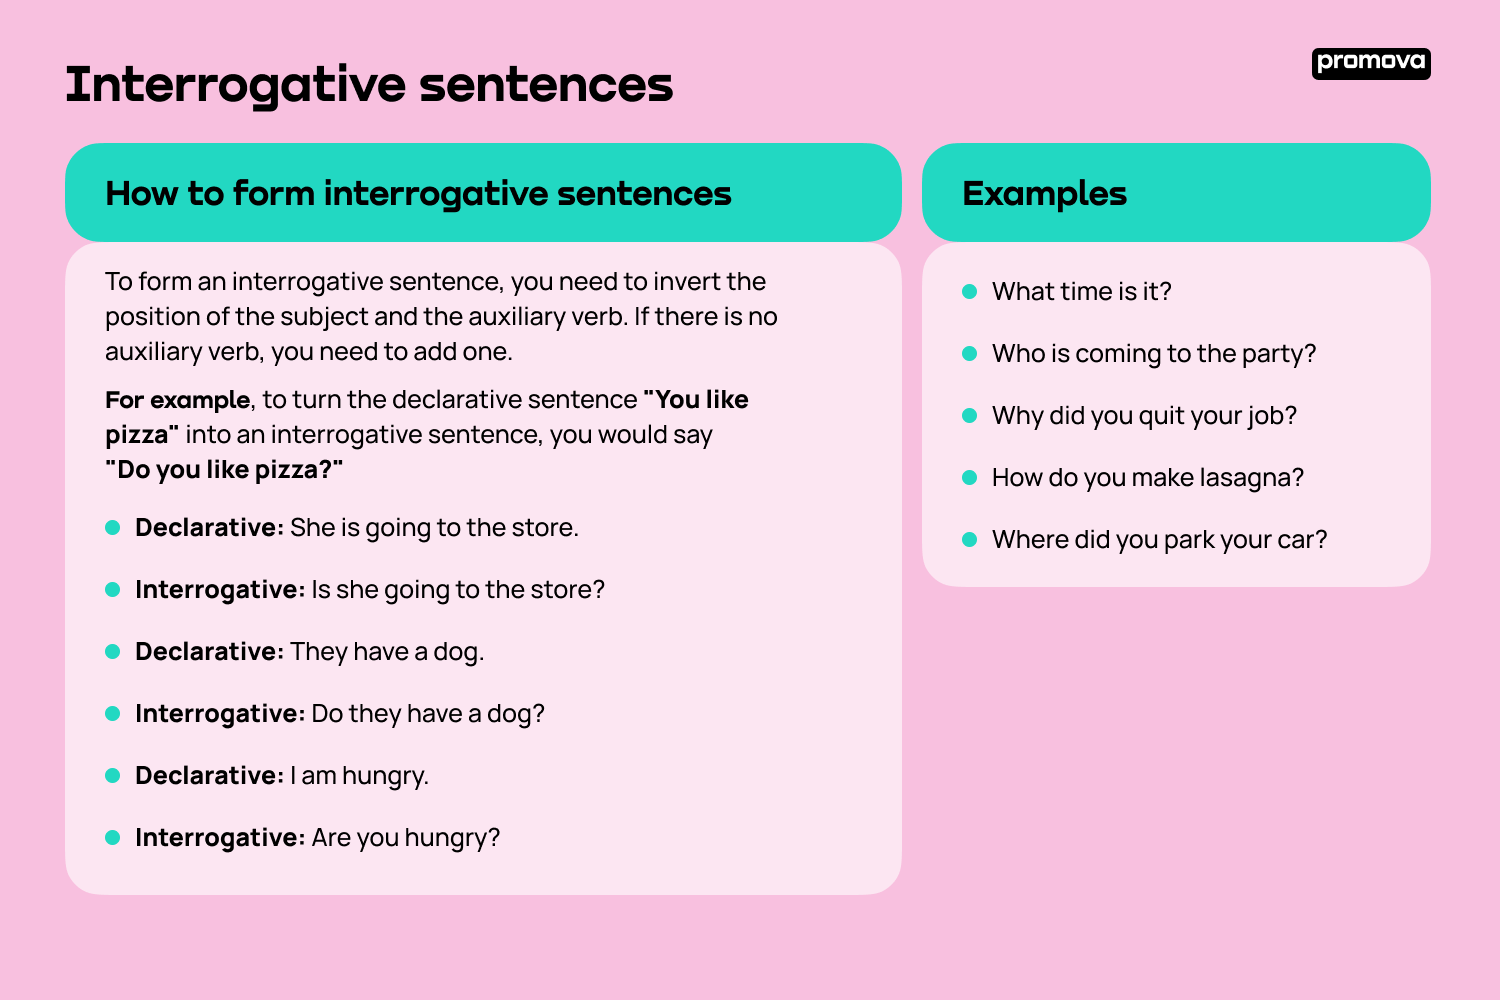 Examples of interrogative sentences